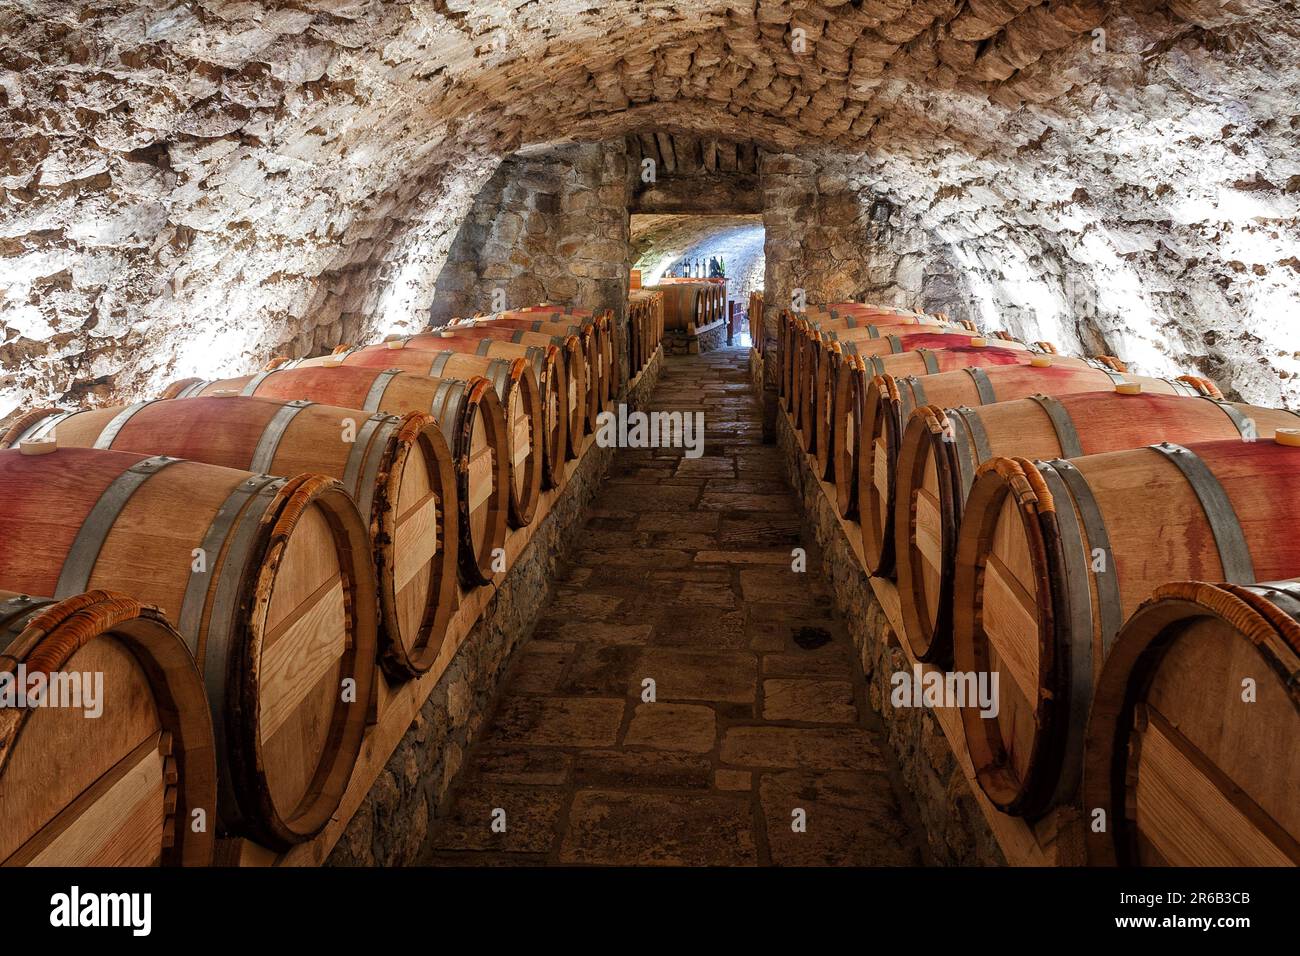 Wine cellar with row of wine barrels Stock Photo